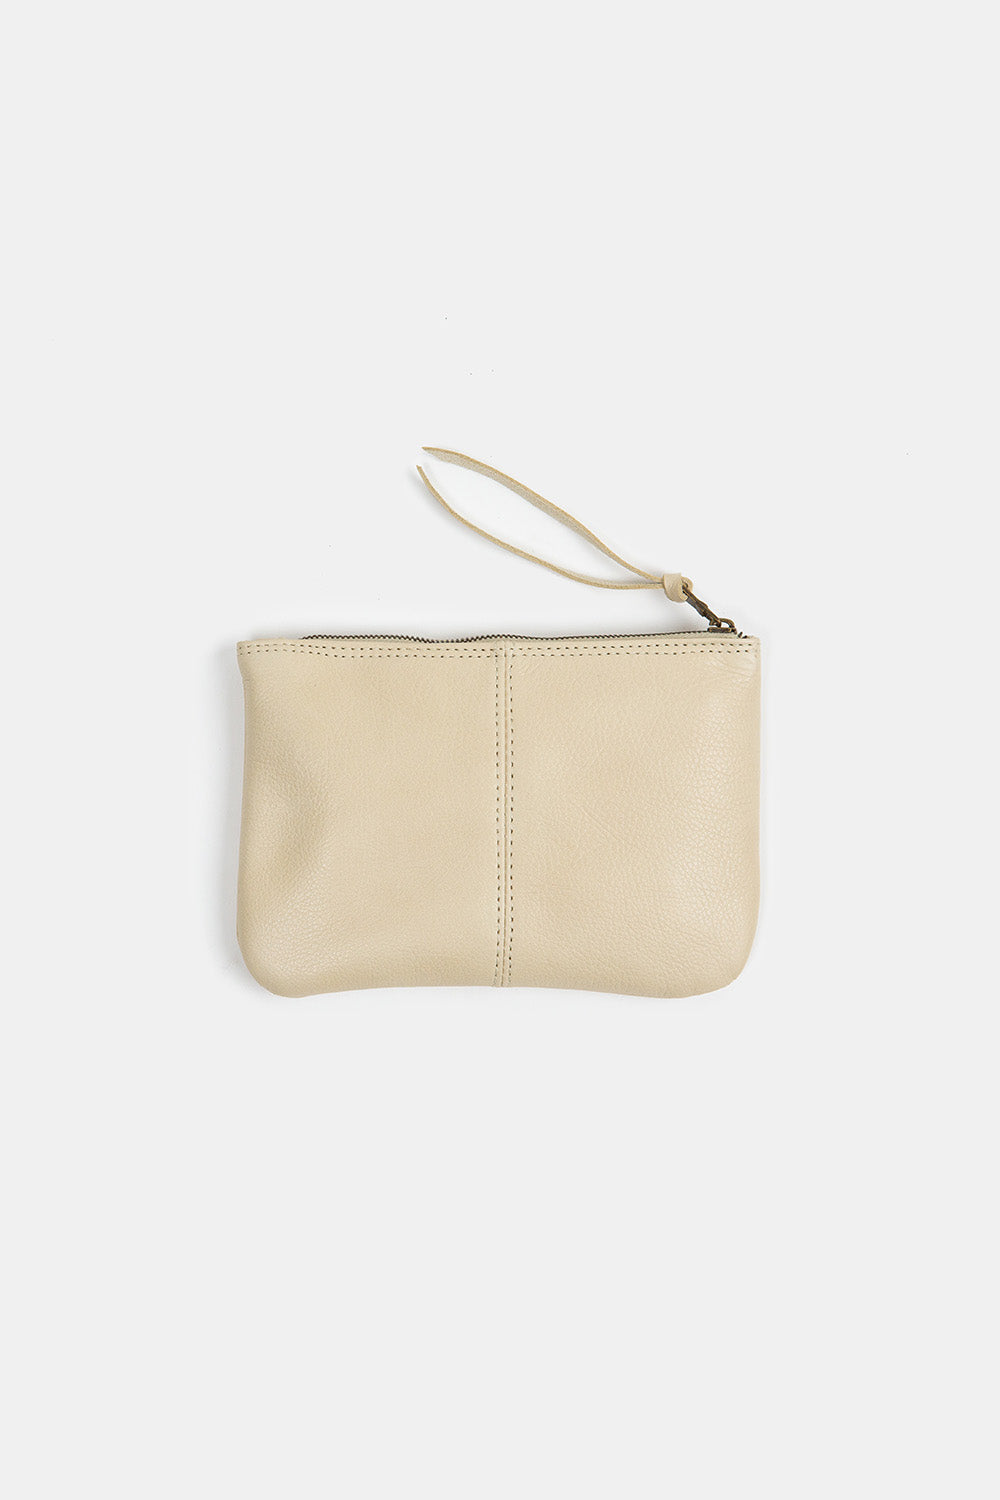 Elodie Leather Make Up Bag In Tufa